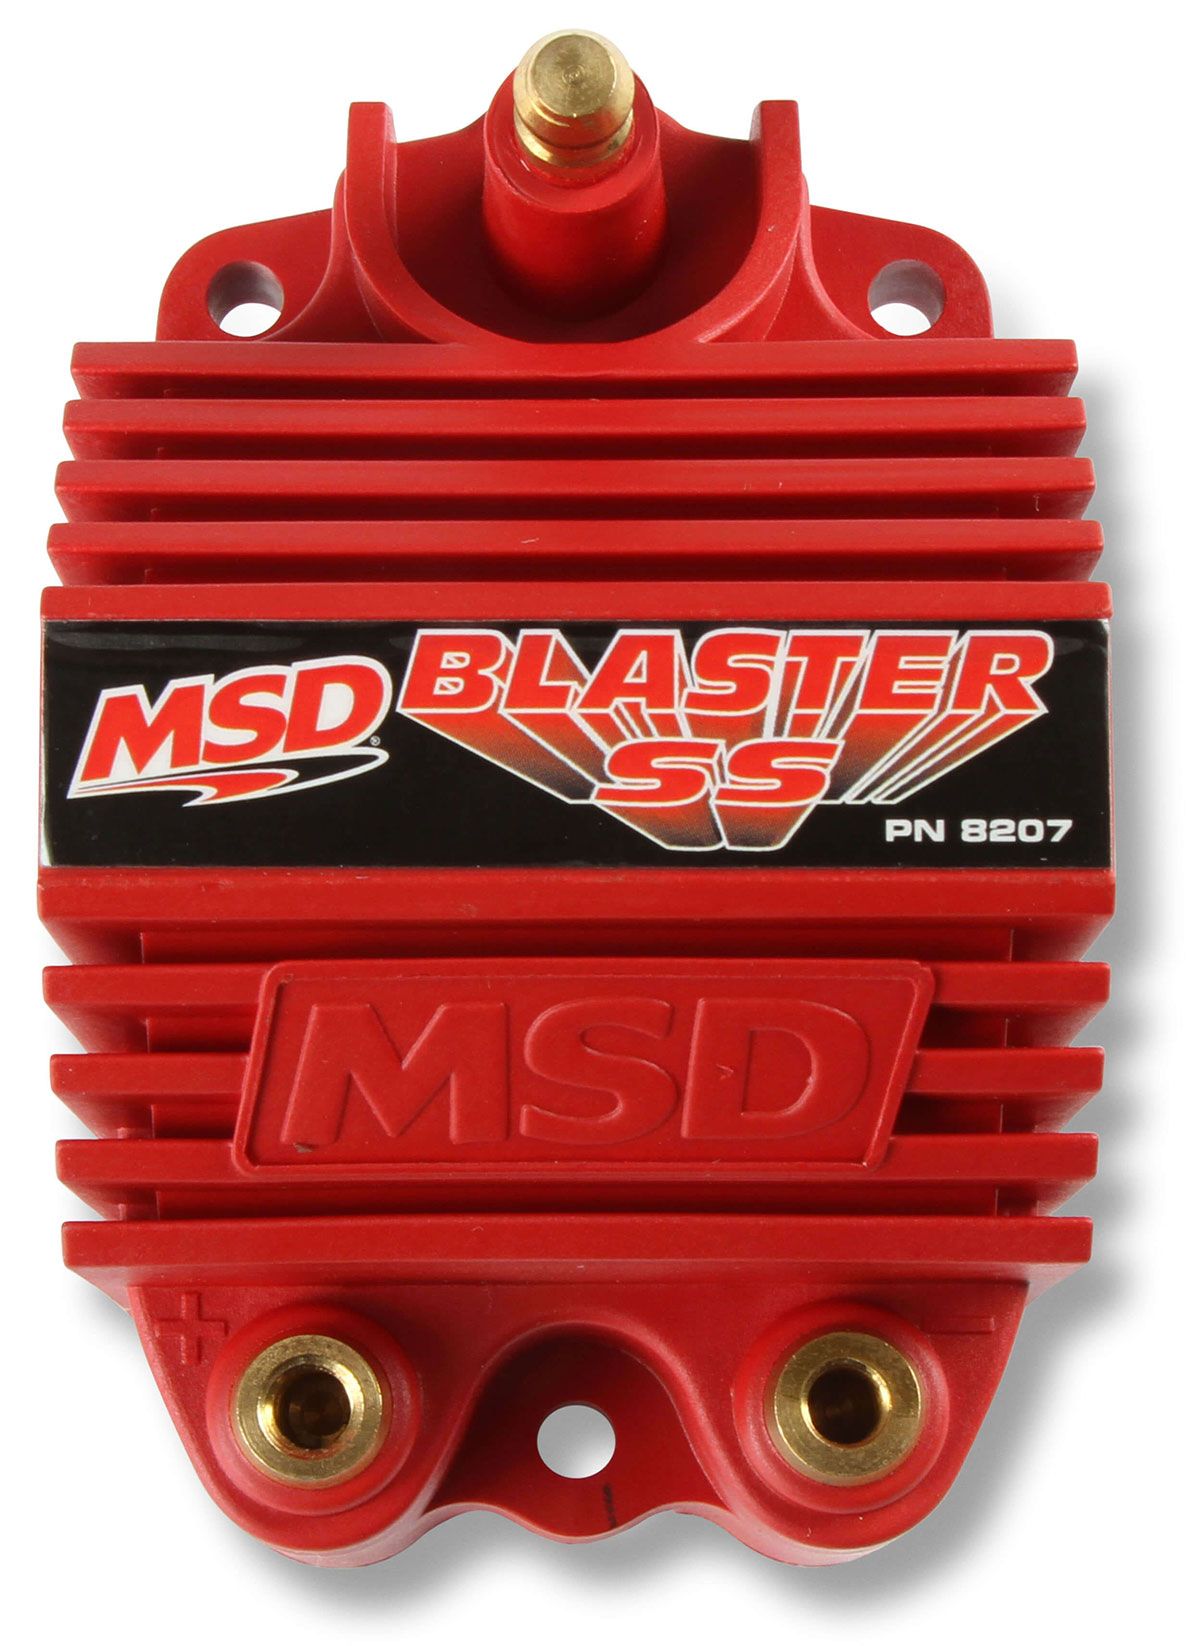 MSD8207 - MSD BLASTER SS COIL